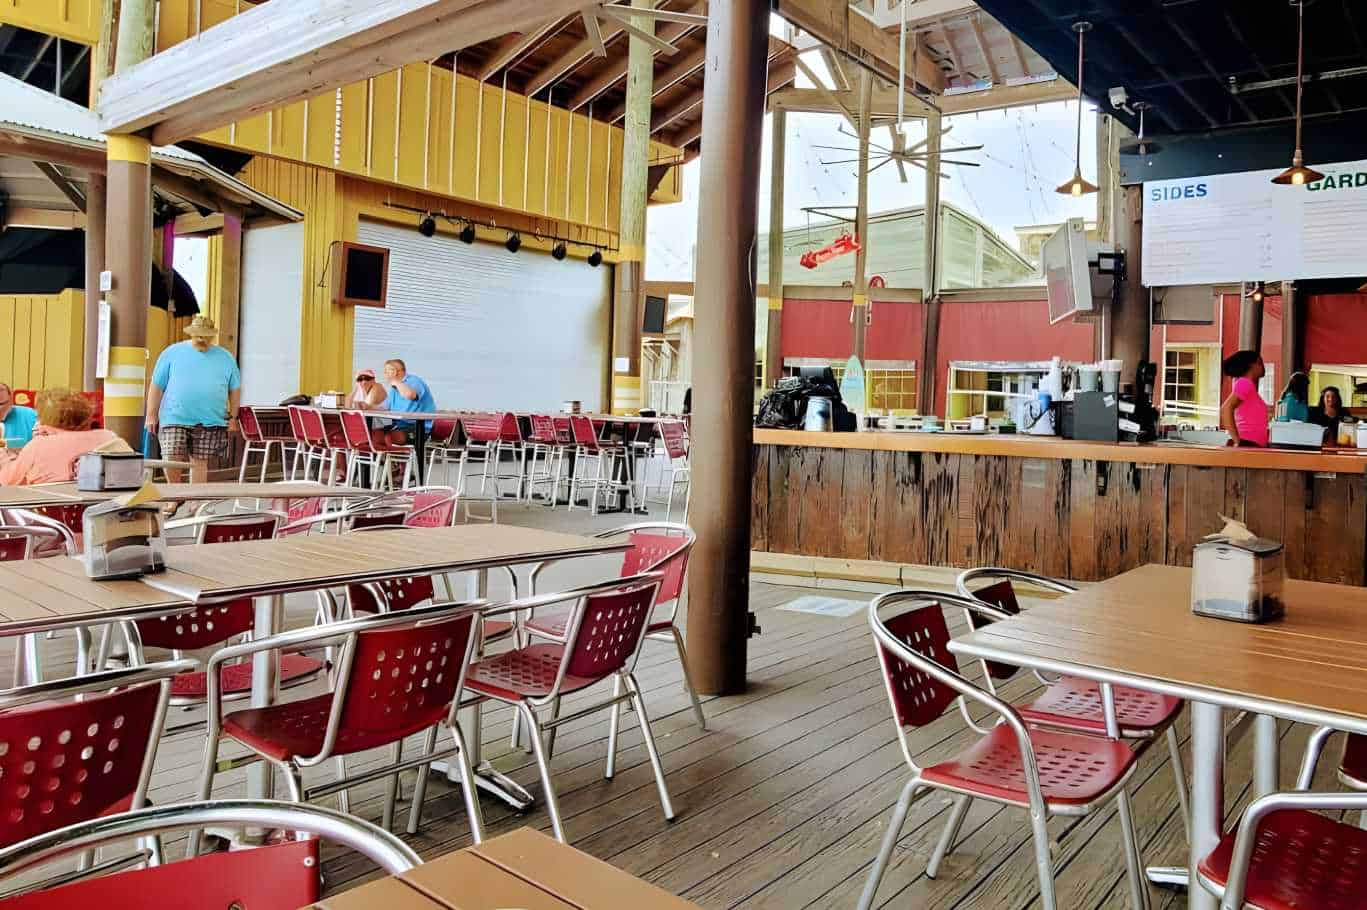 Al’s Beach Club Best Restaurants in Fort Walton Beach, FL